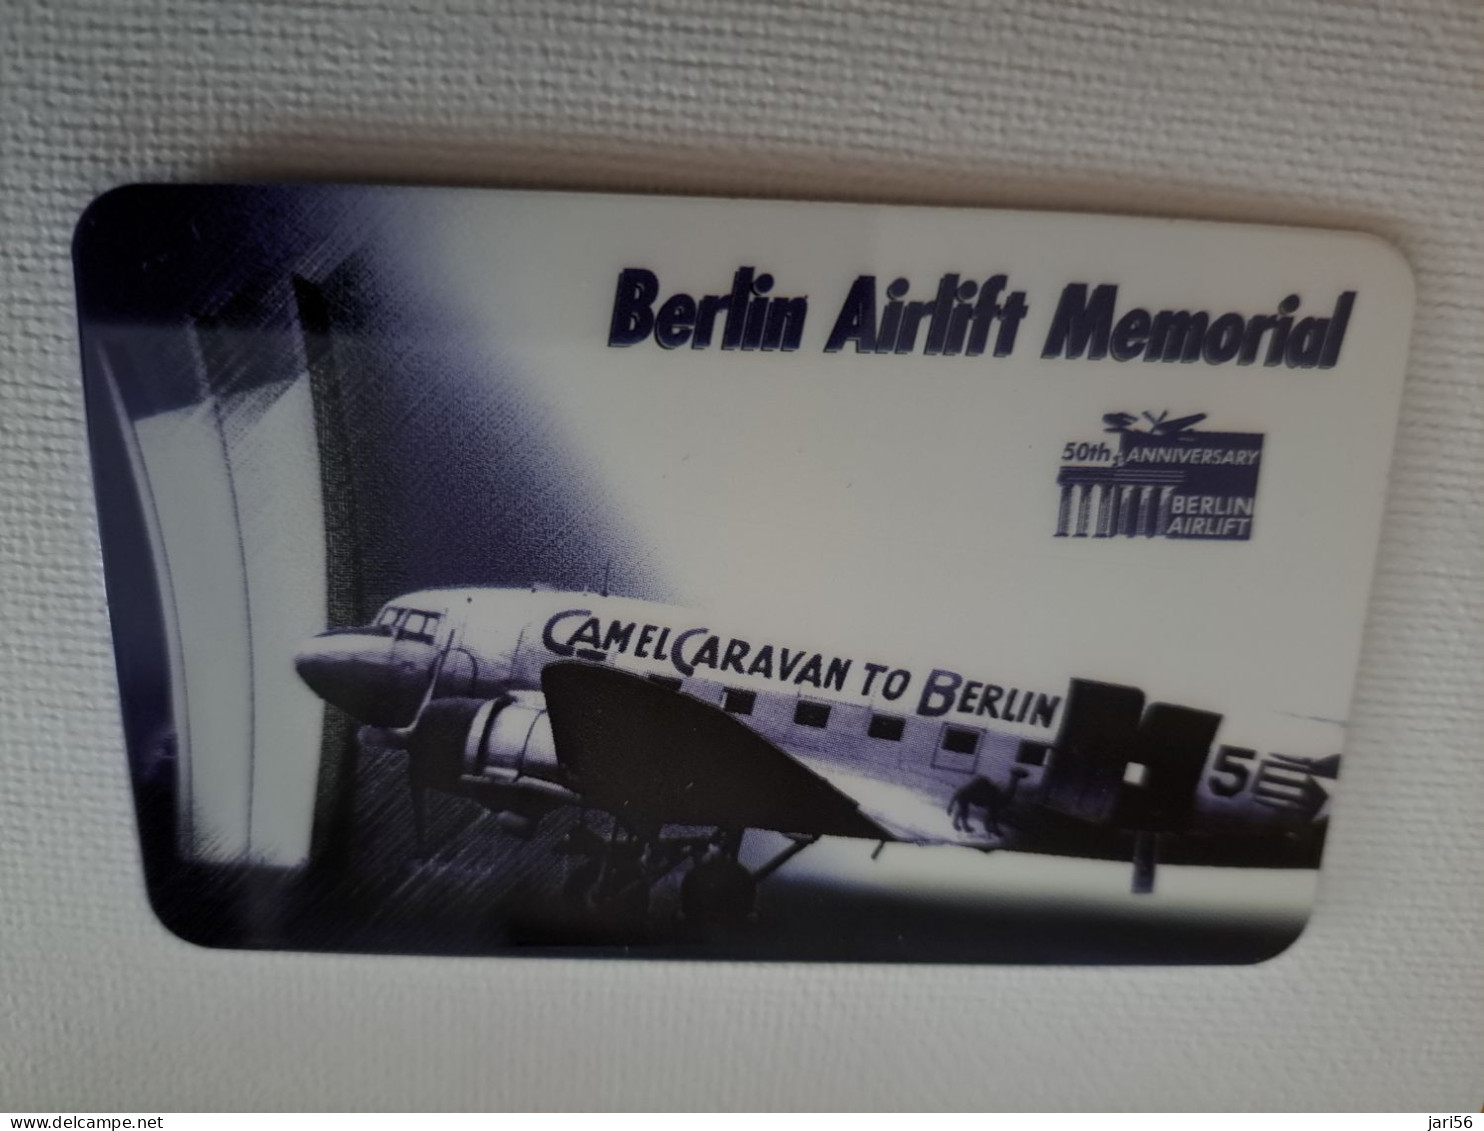 GREAT BRITAIN /20 UNITS / BERLIN AIRLIFT MEMORIAL/ AIRPLANE     /  / (date 09/98) PREPAID CARD / MINT  **15759** - Collezioni